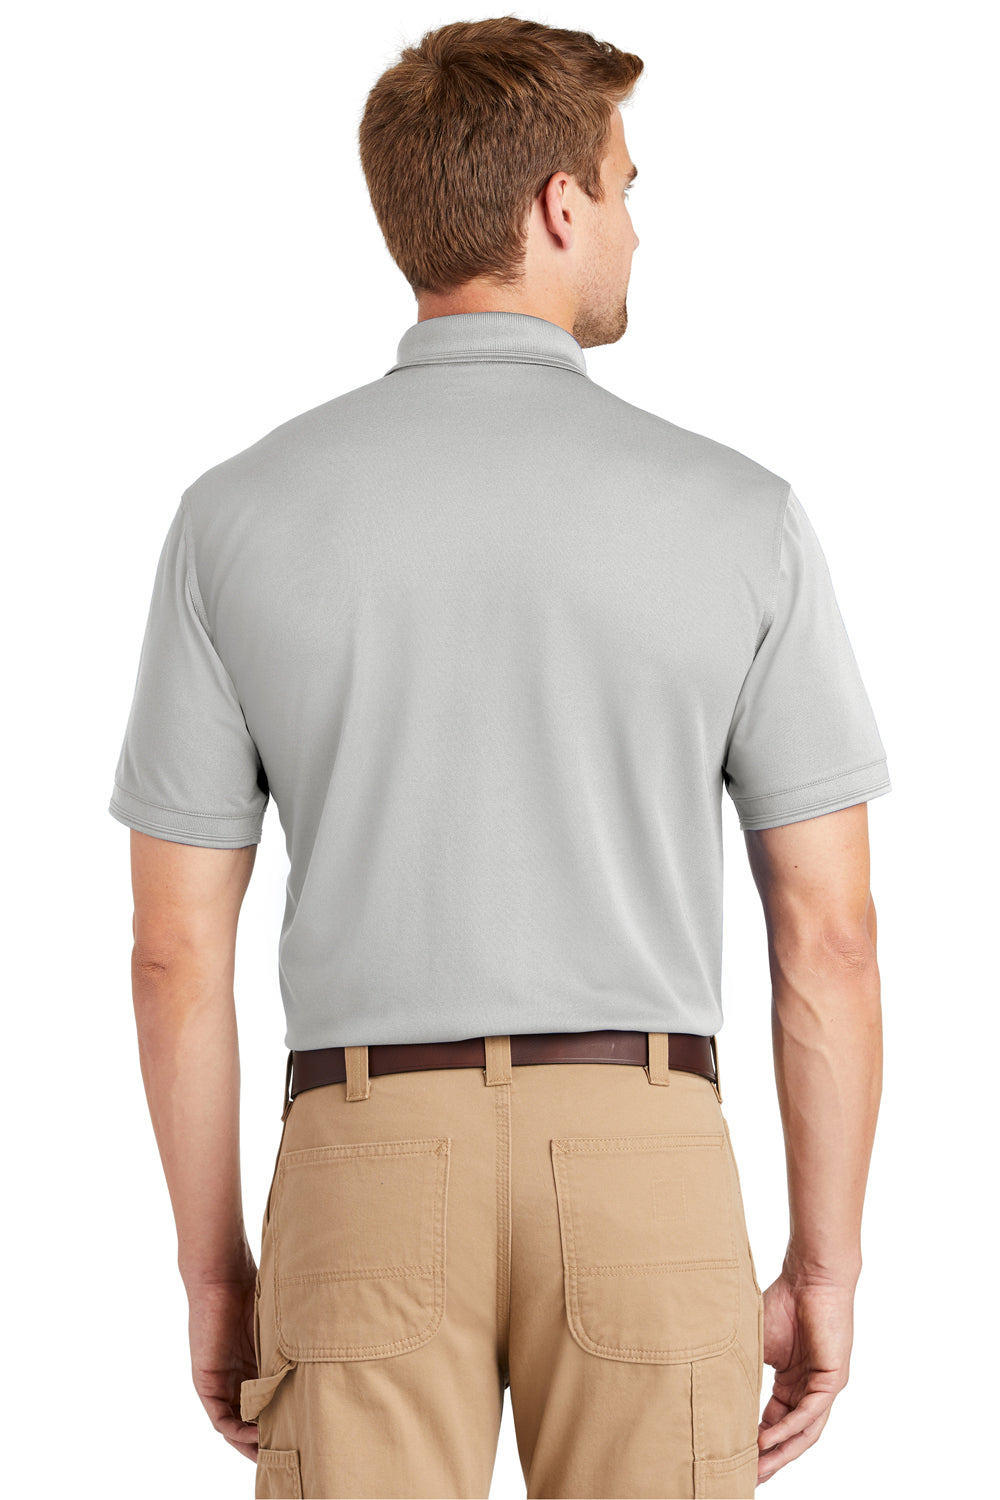 CornerStone CS4020 Mens Industrial Moisture Wicking Short Sleeve Polo Shirt Light Grey Back